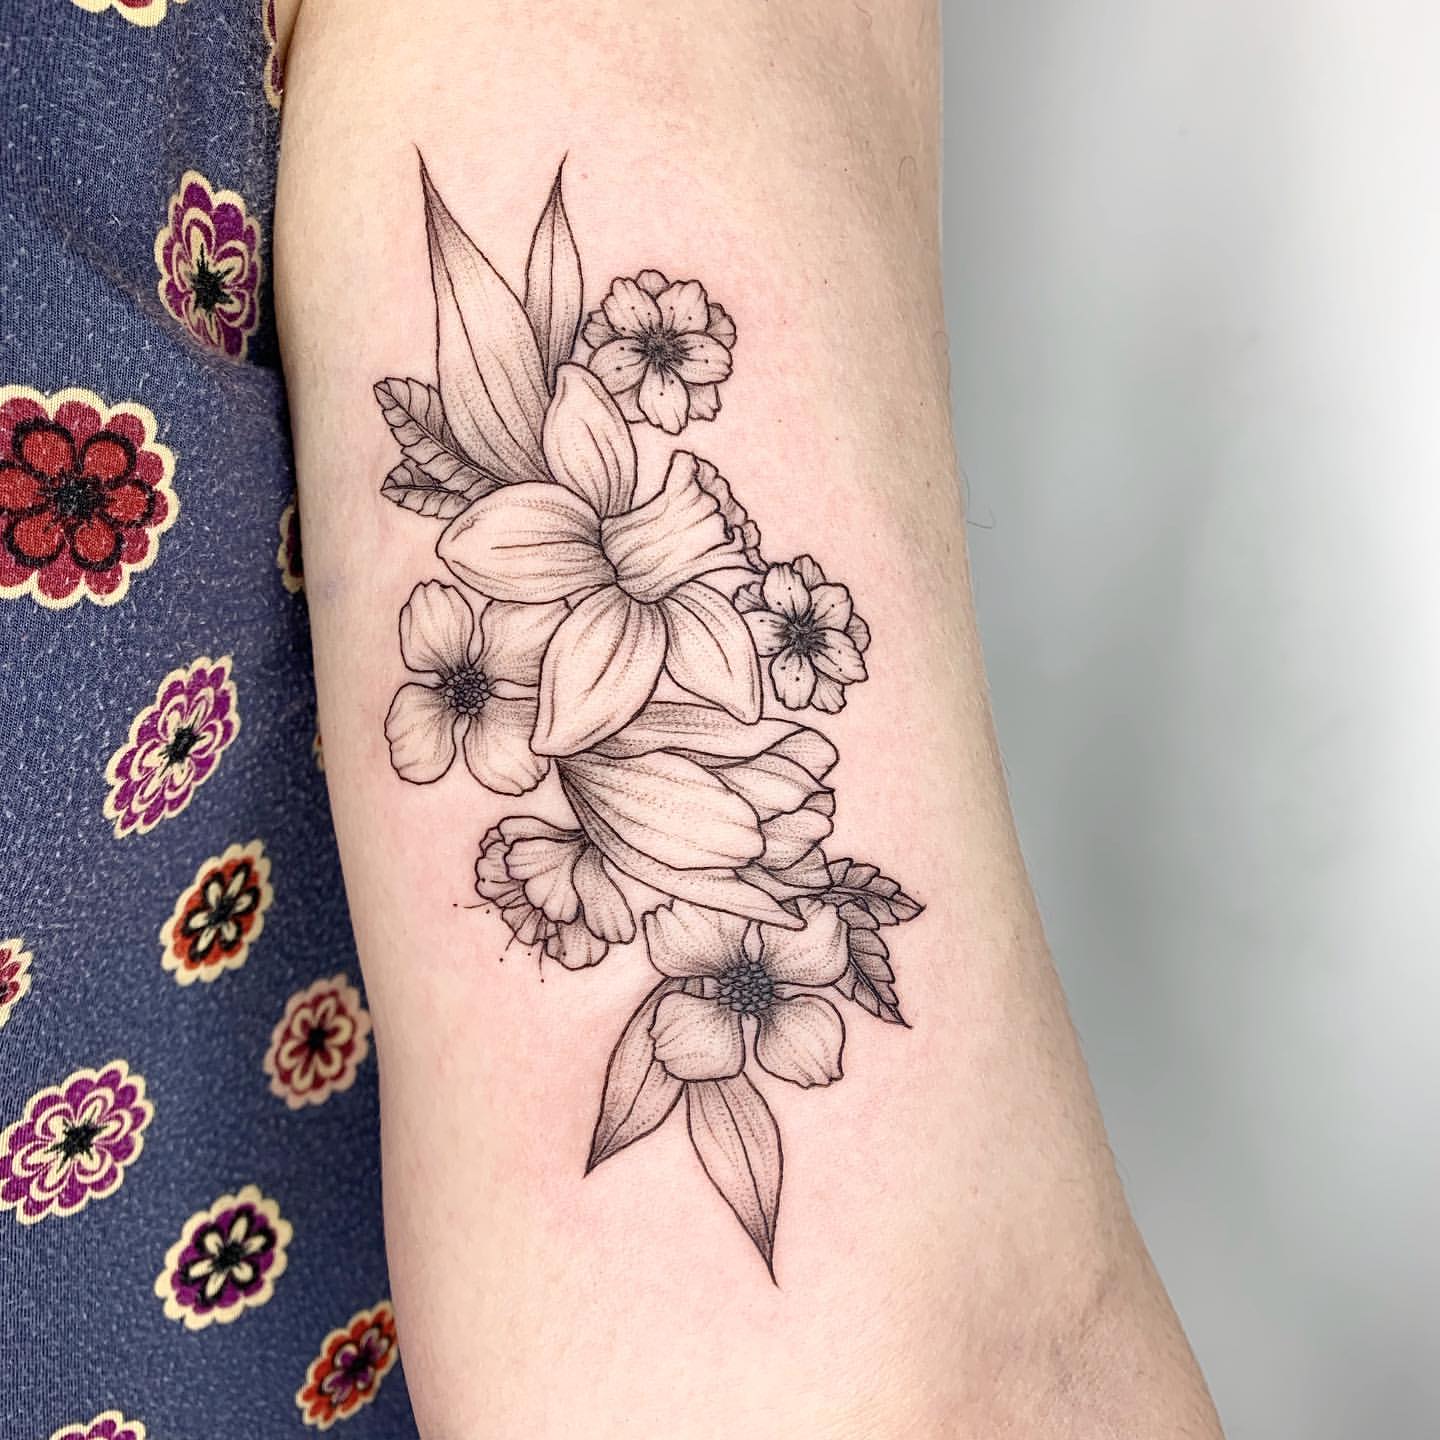 Top 79 Best Small Flower Tattoo Ideas - [2021 Inspiration Guide]